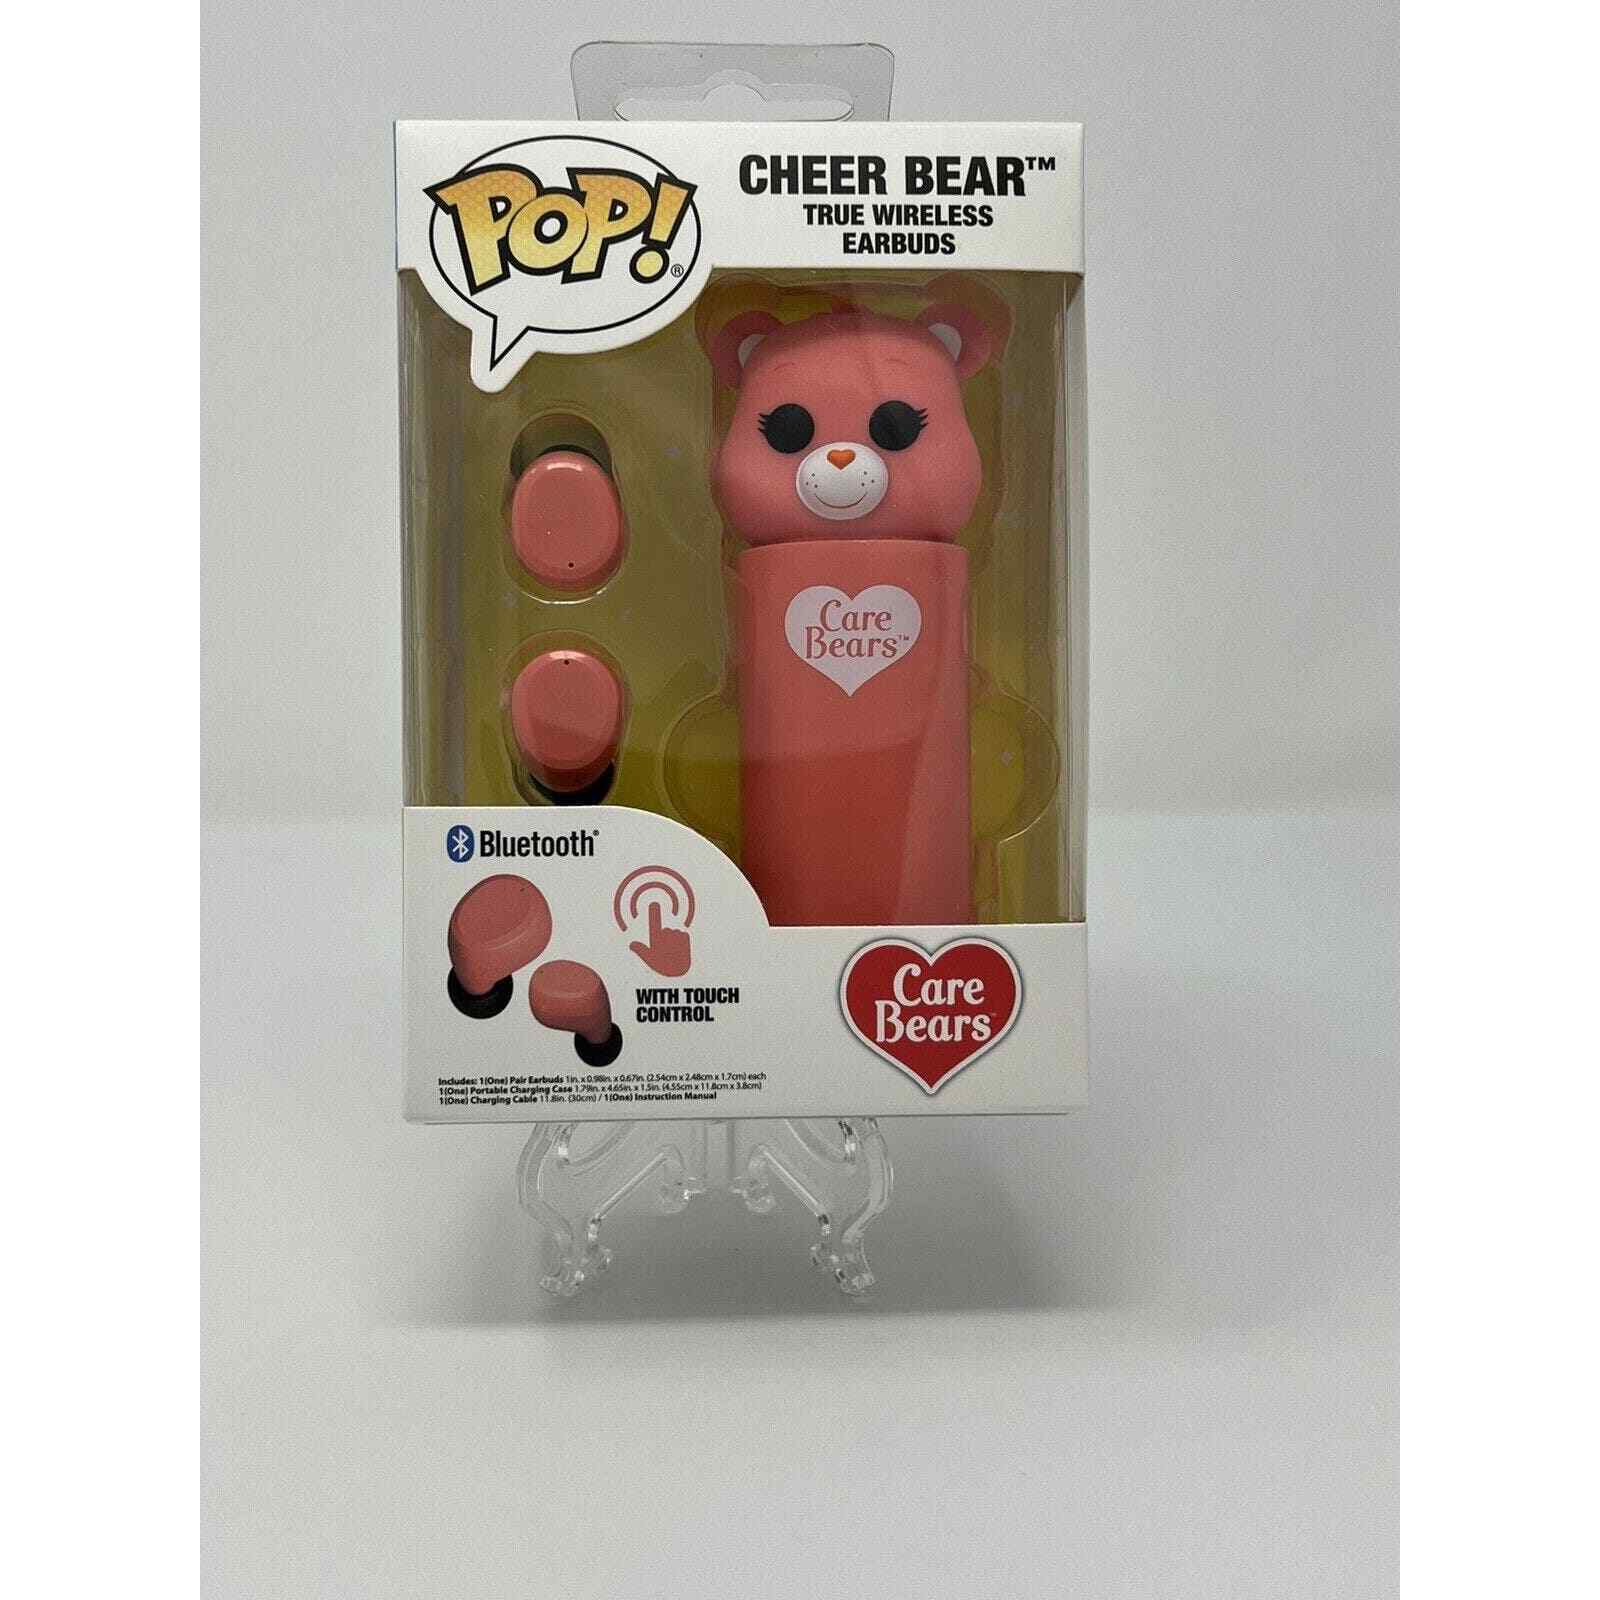 Funko POP Care Bears Bluetooth Wireless Earbuds - Cheer Bear